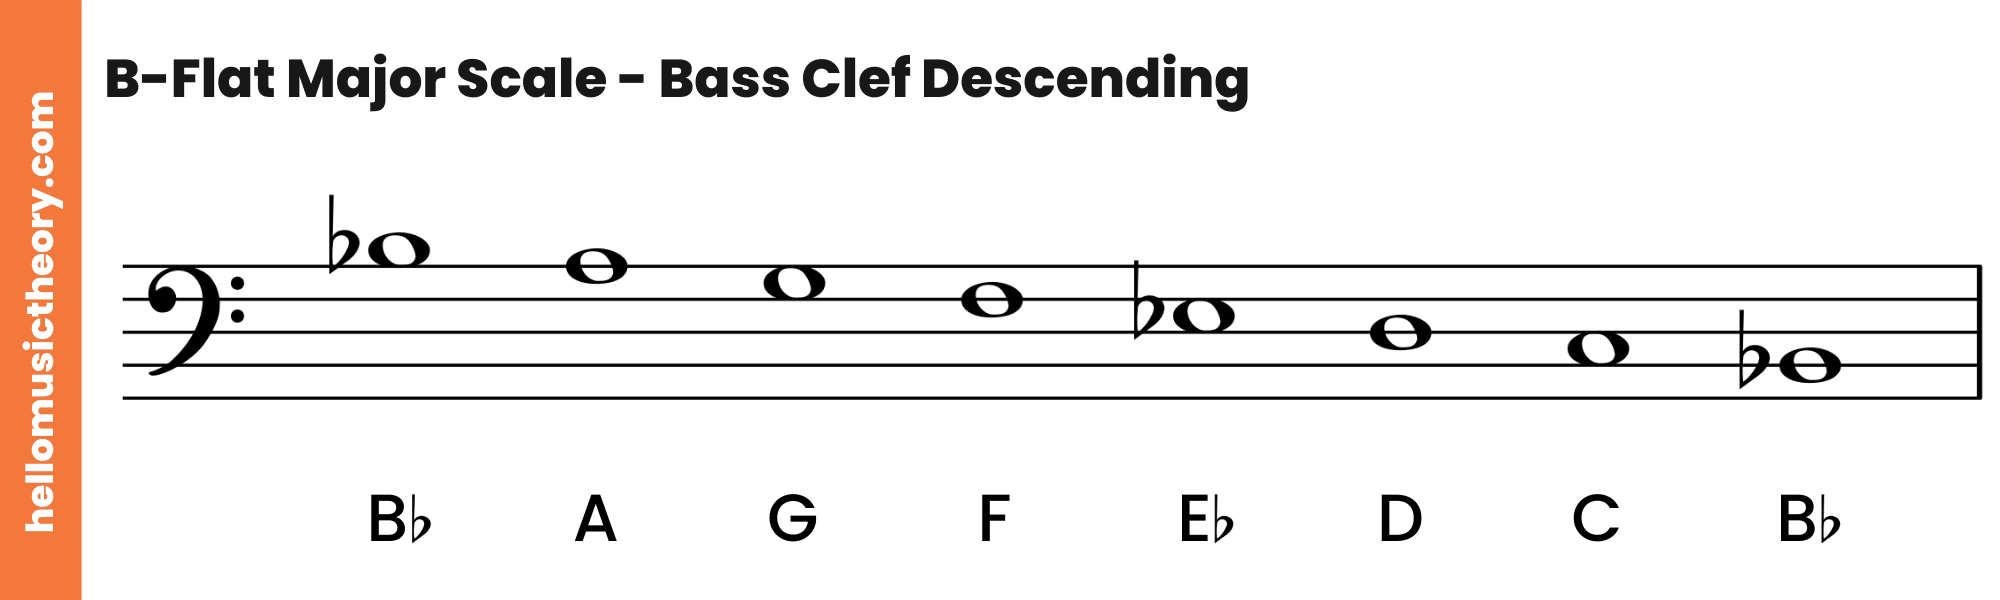 B-Flat Major Scale Bass Clef Descending